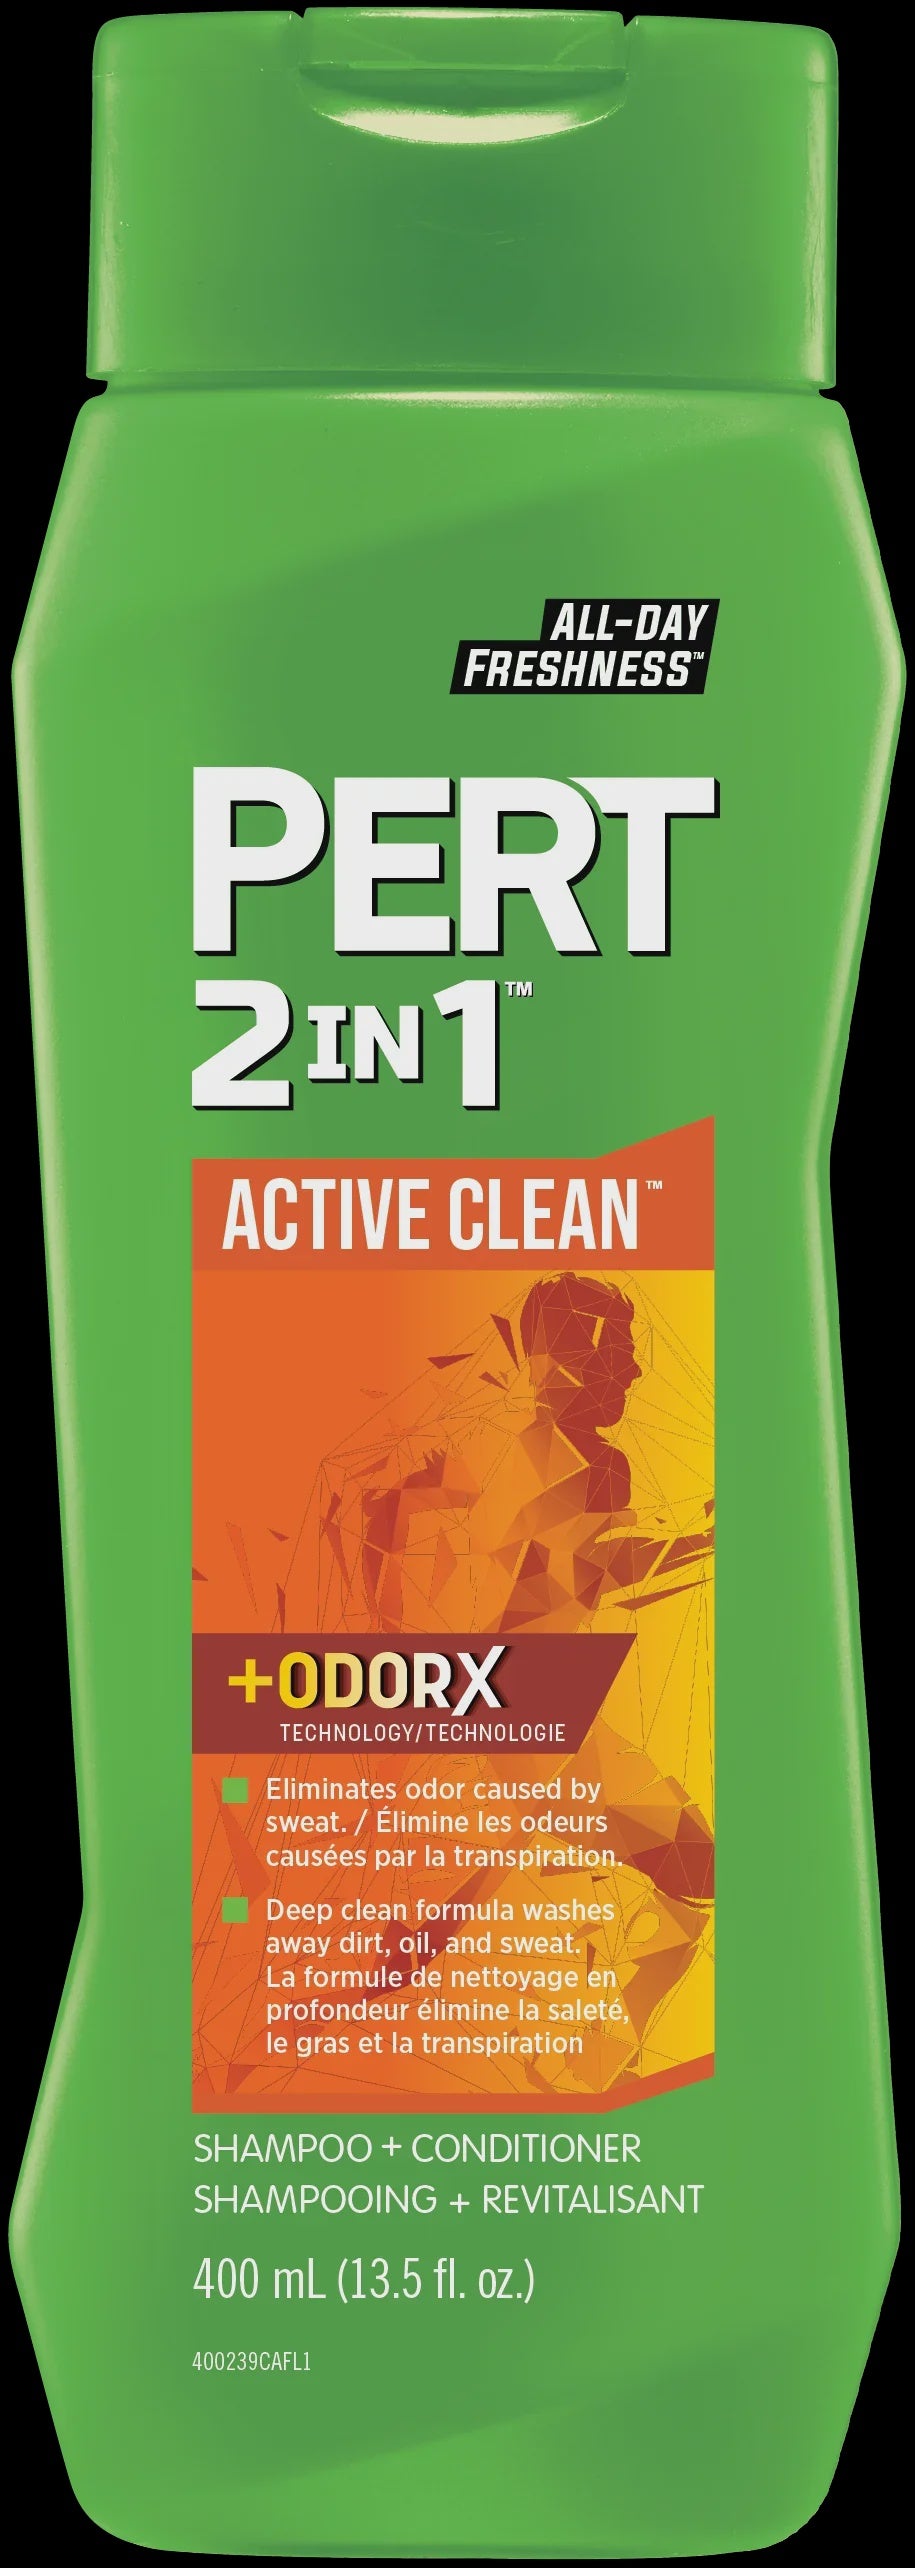 Pert 2in1 Active Clean + OdorX